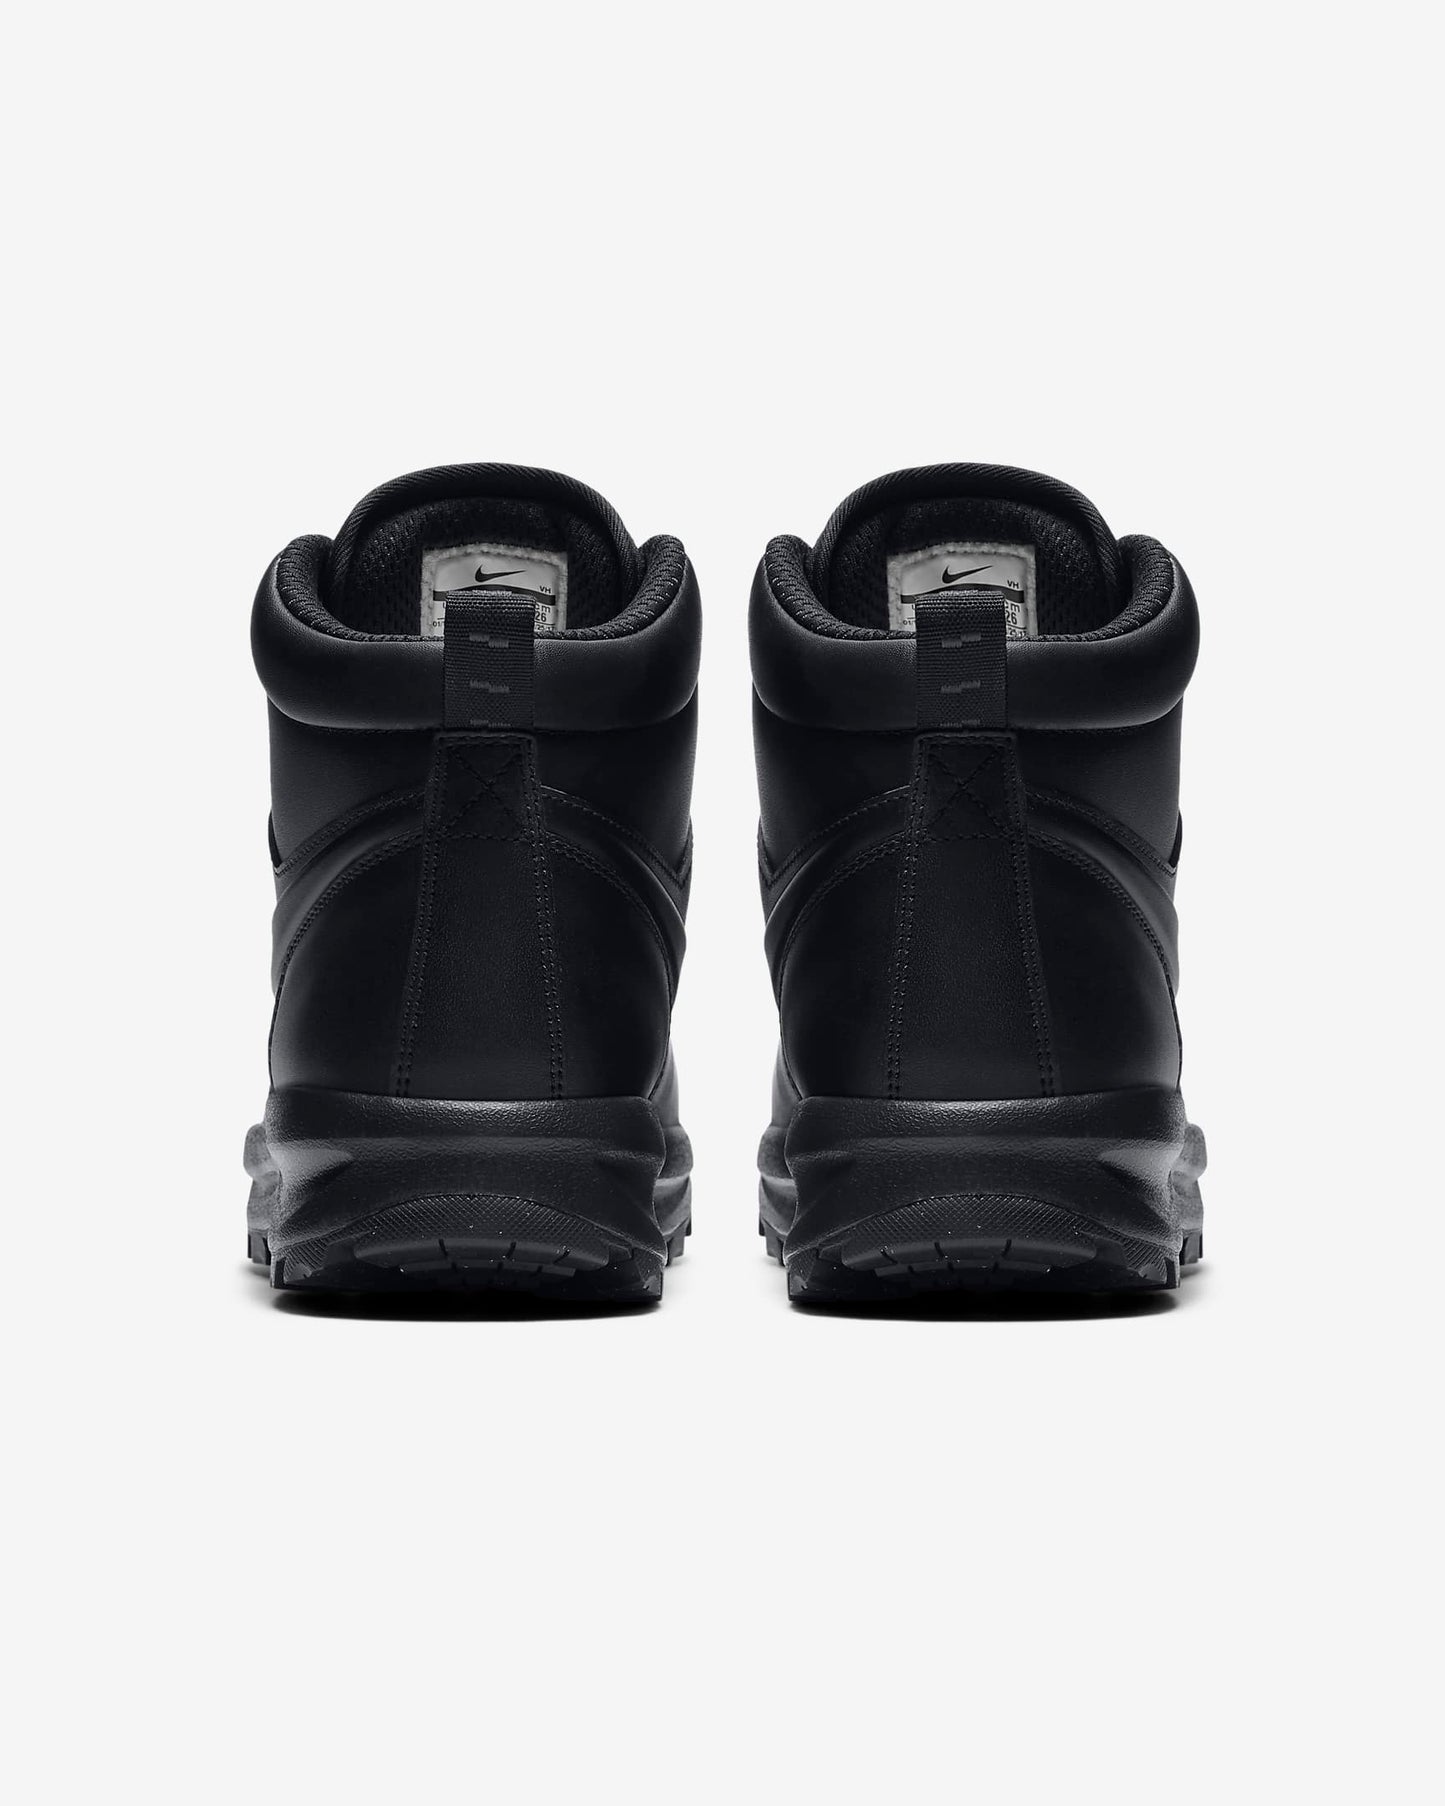 Nike Manoa Leather SE Black DC8892-001